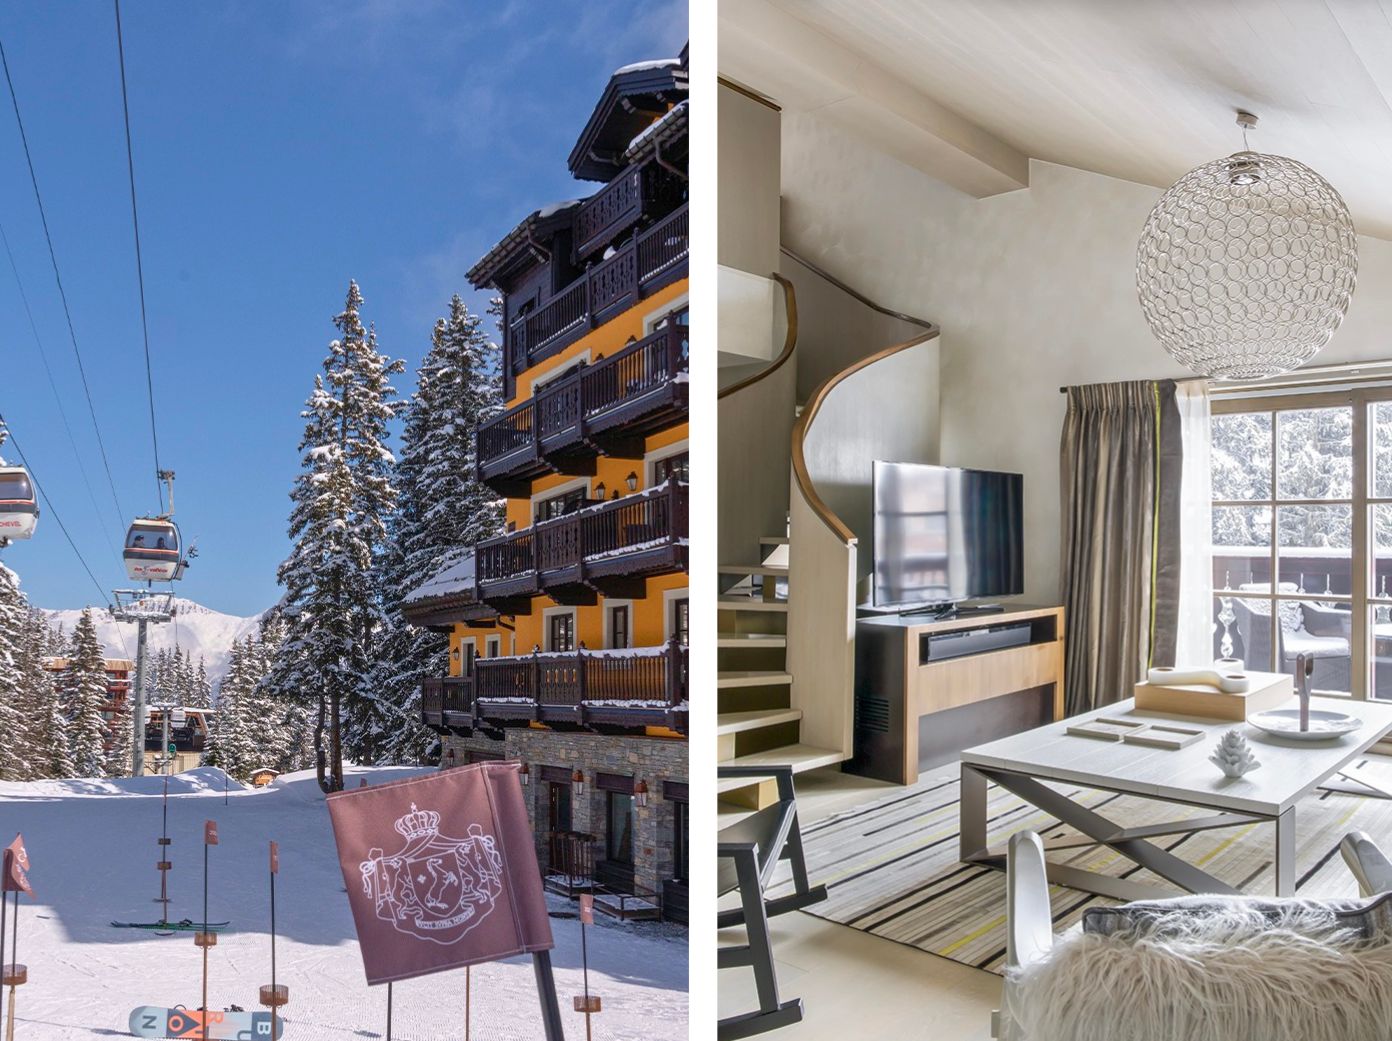 Cheval Blanc Courchevel Luxury Hotel & Chalet, Alps, France / Casol 